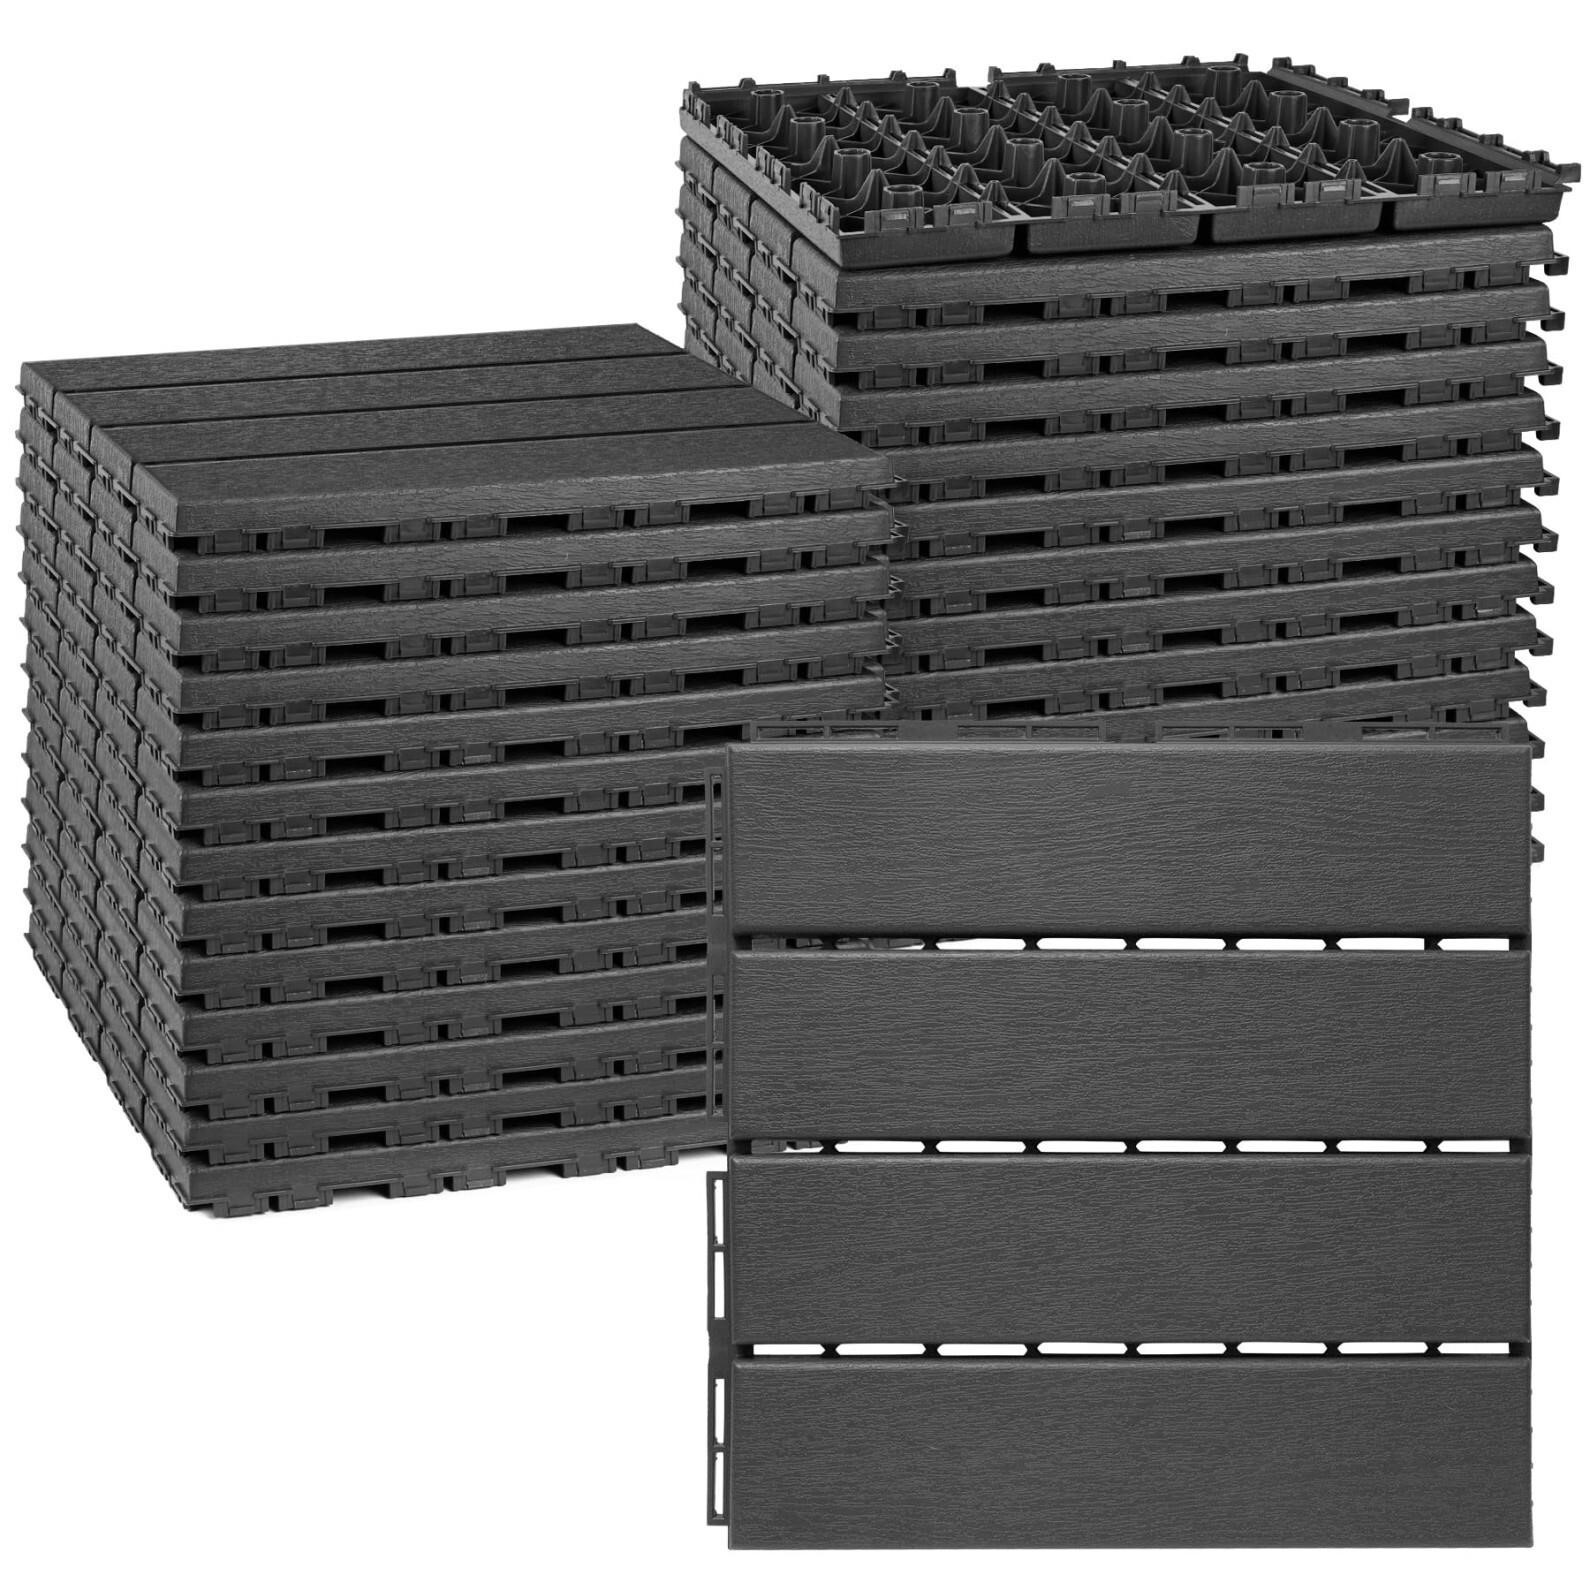 ToLanbbt Plastic Interlocking Deck Tiles 27 Pack 1